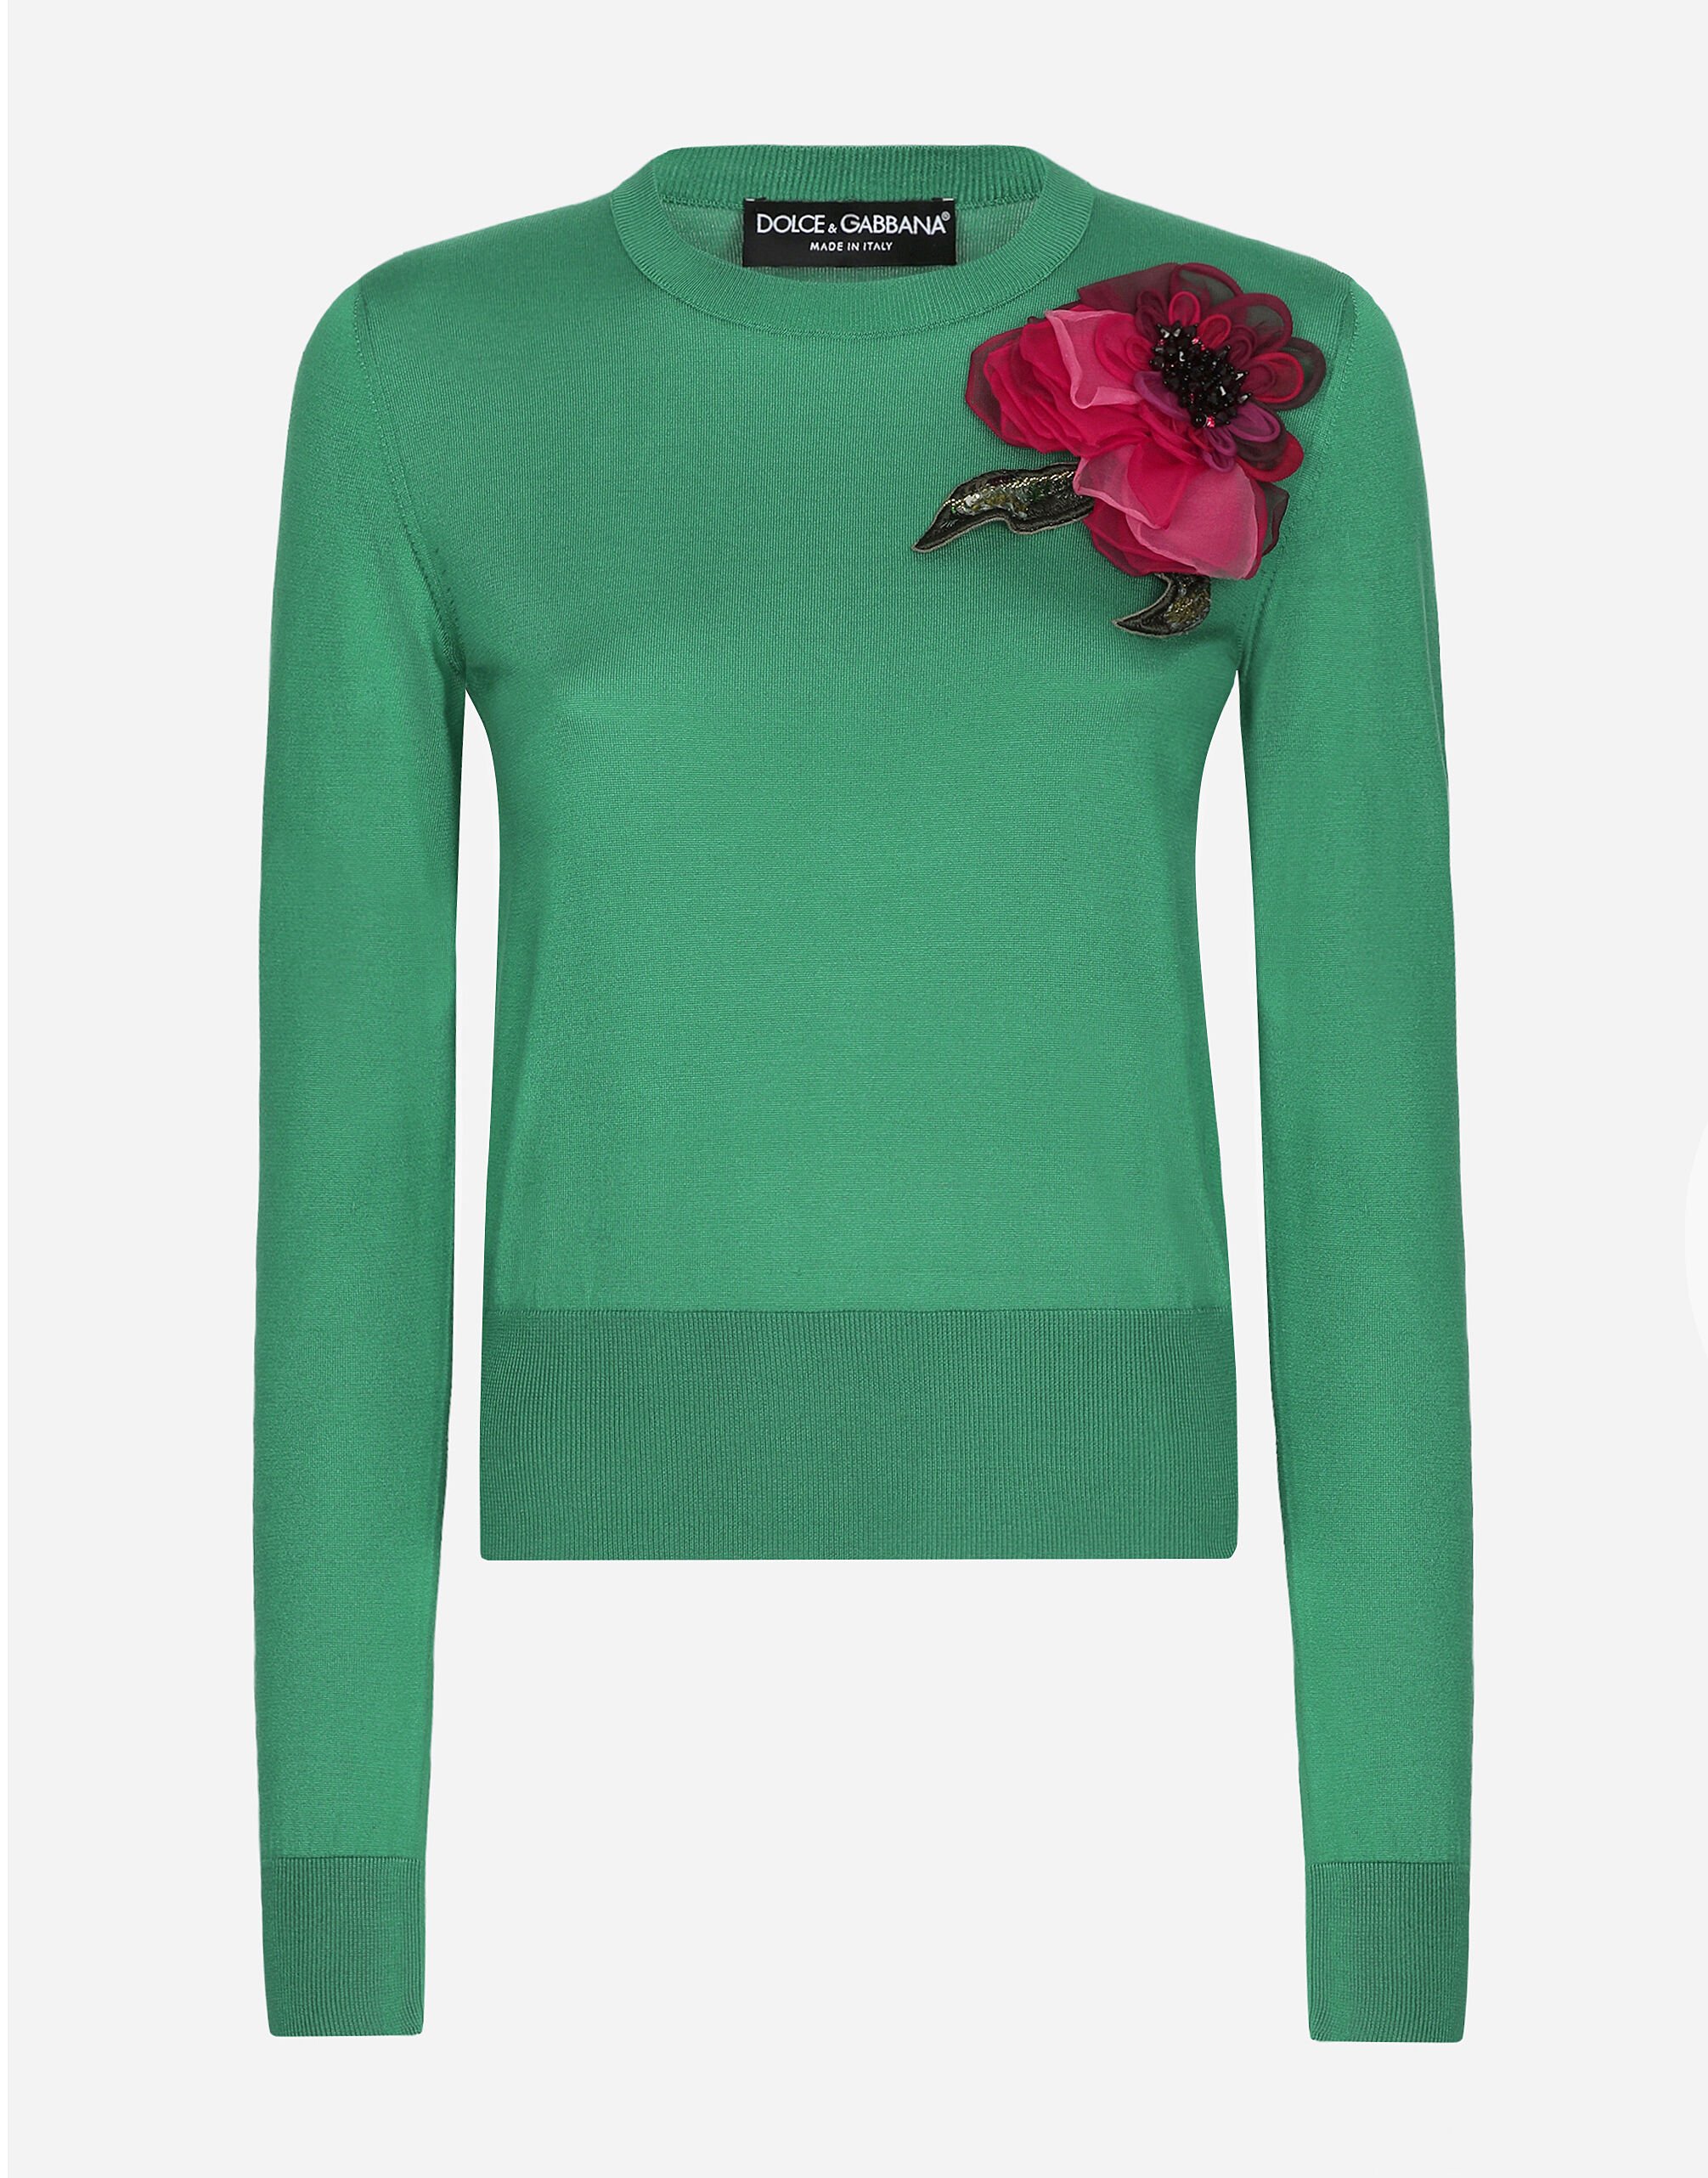 Dolce & Gabbana Silk sweater with flower appliqué Print FXX06TJCVYK